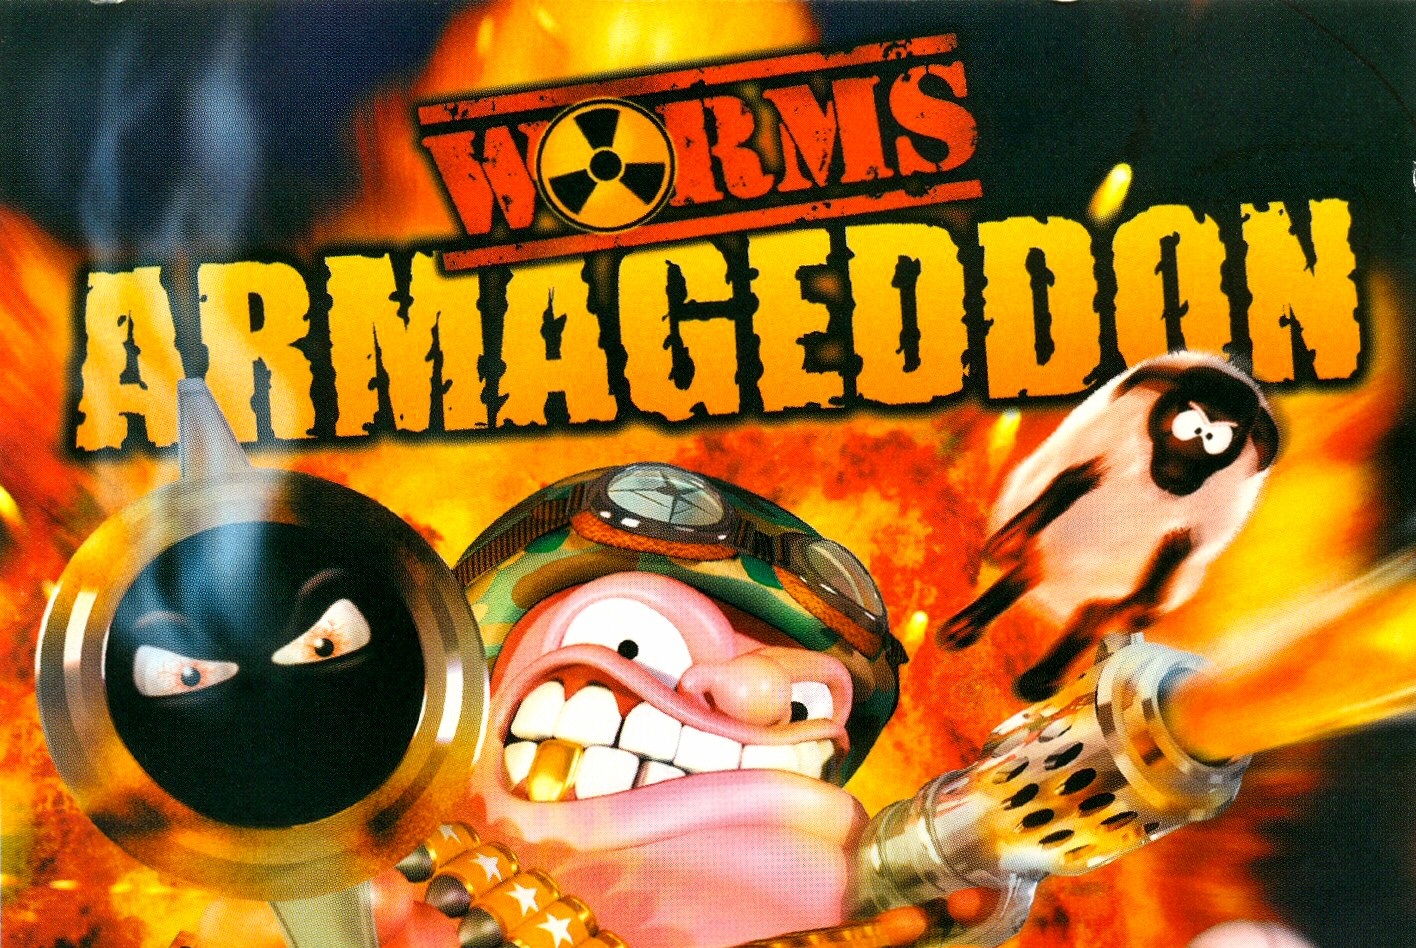 Worms armageddon on steam фото 26